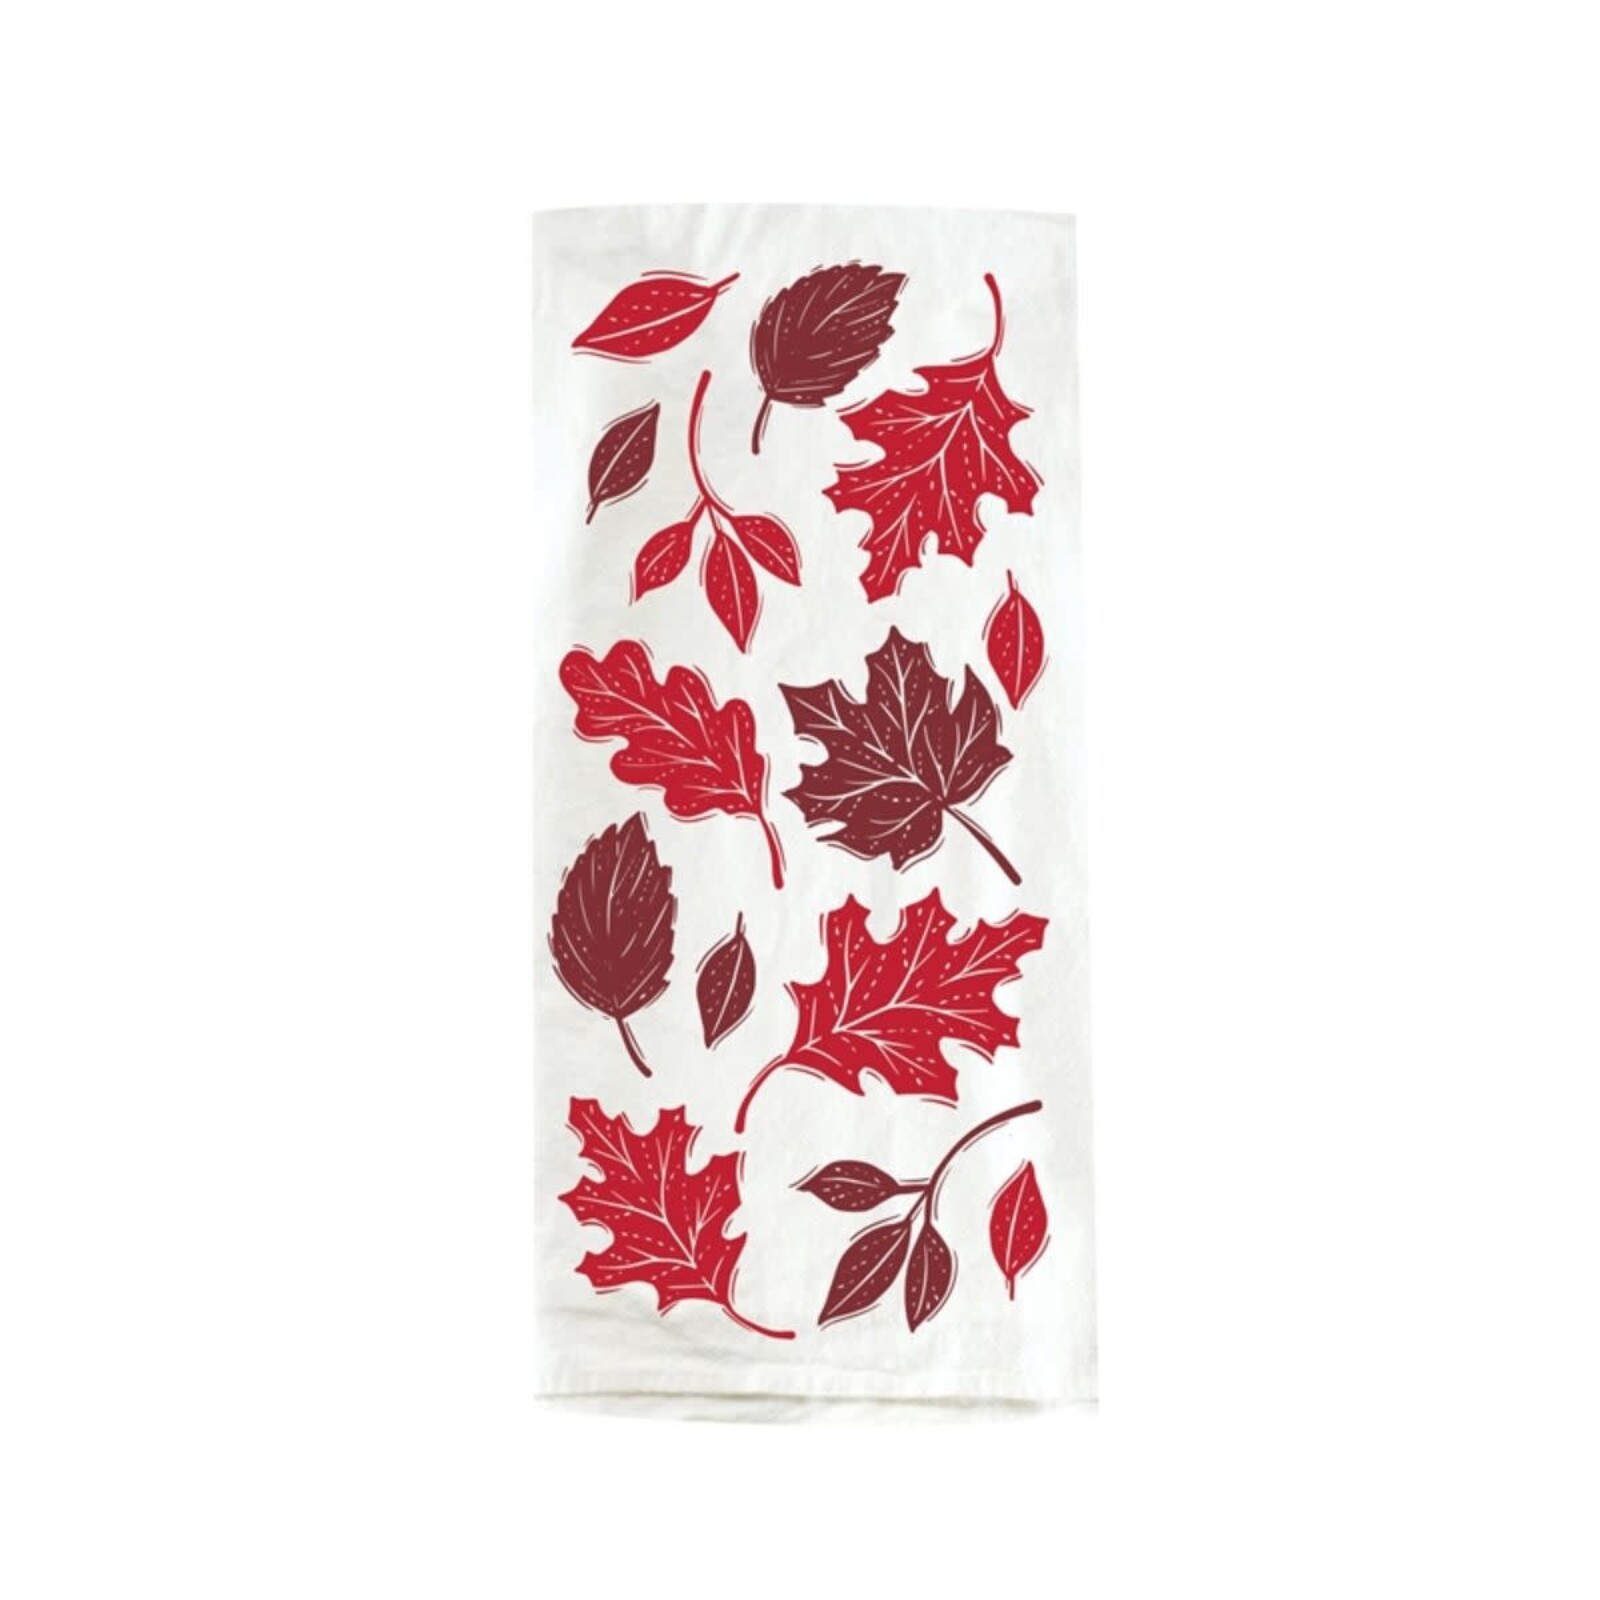 Evergreen Enterprises Flour Sack Towel Gift Set with Wooden Spoon  Harvest  4FS7882 loading=